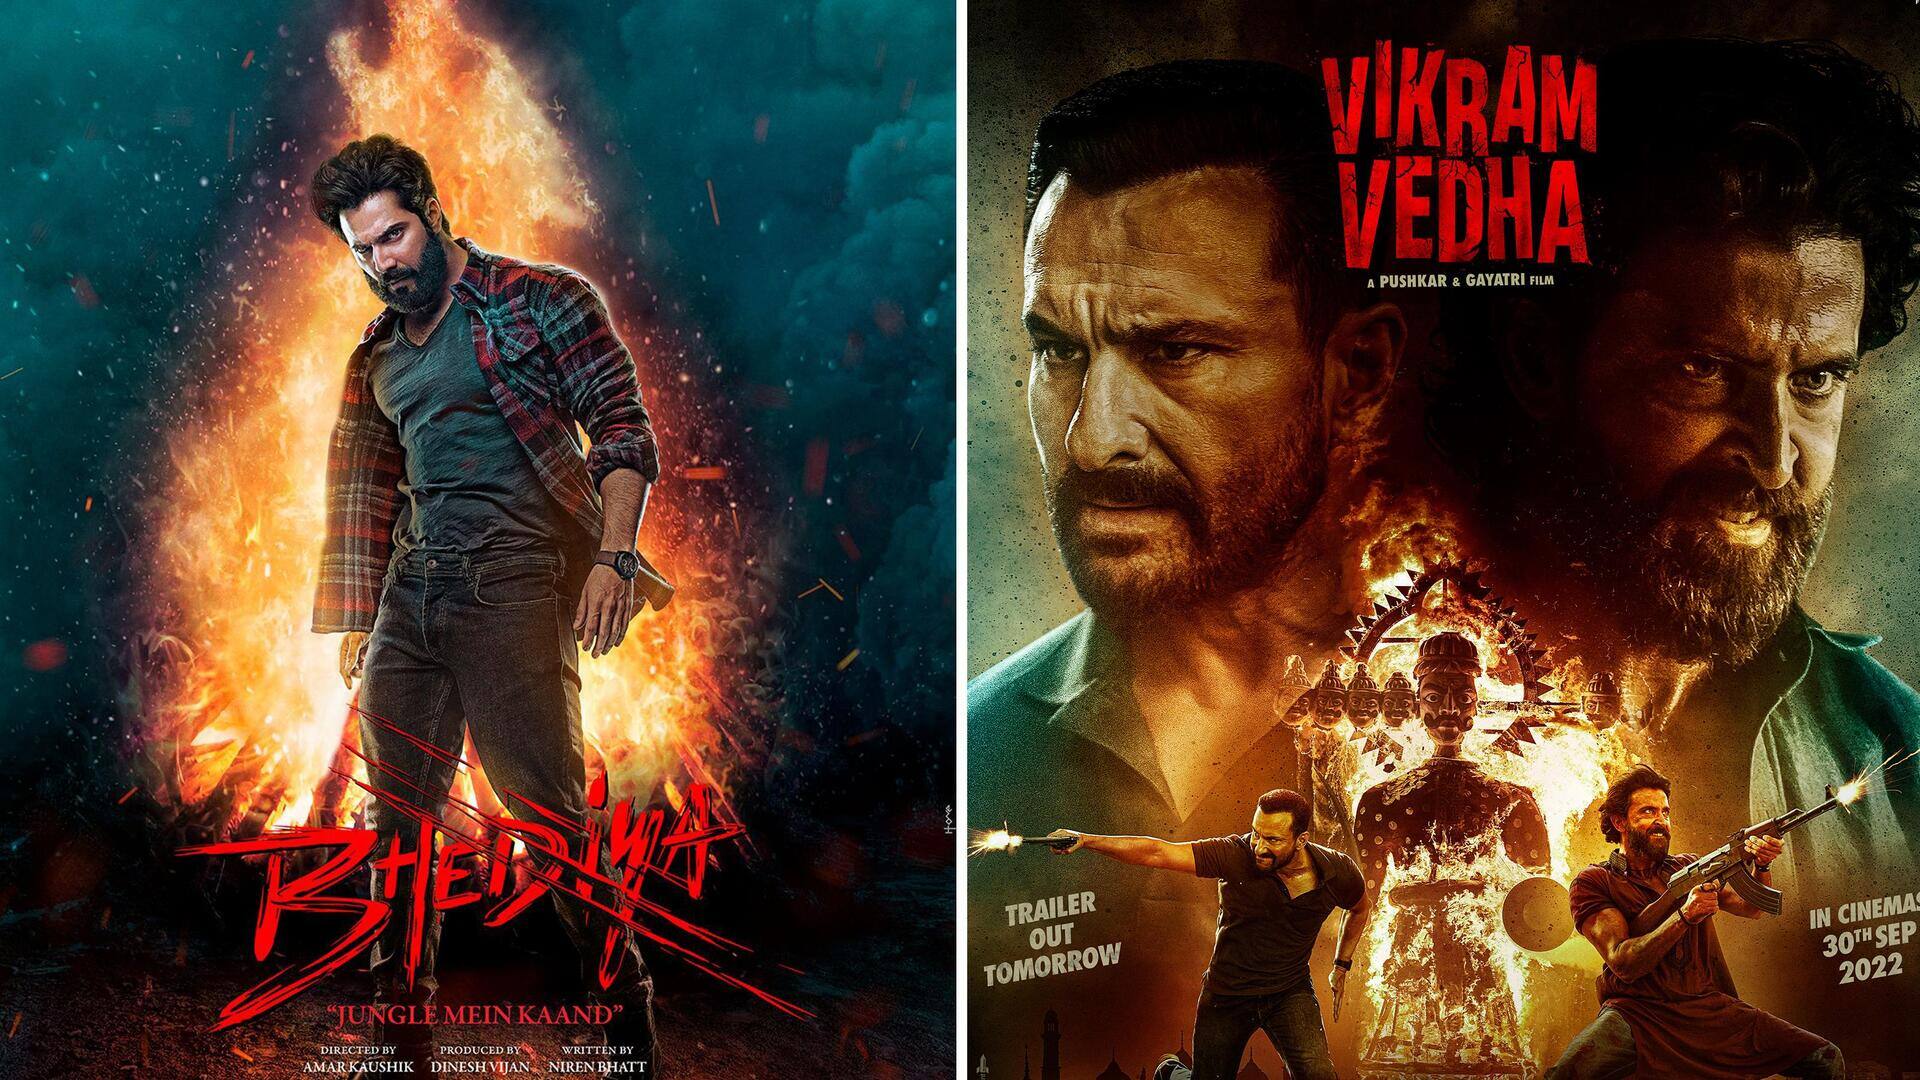 फिल्म 'भेड़िया' और 'विक्रम वेधा' करेंगी जियो सिनेमा का रुख, सामने आई रिलीज डेट